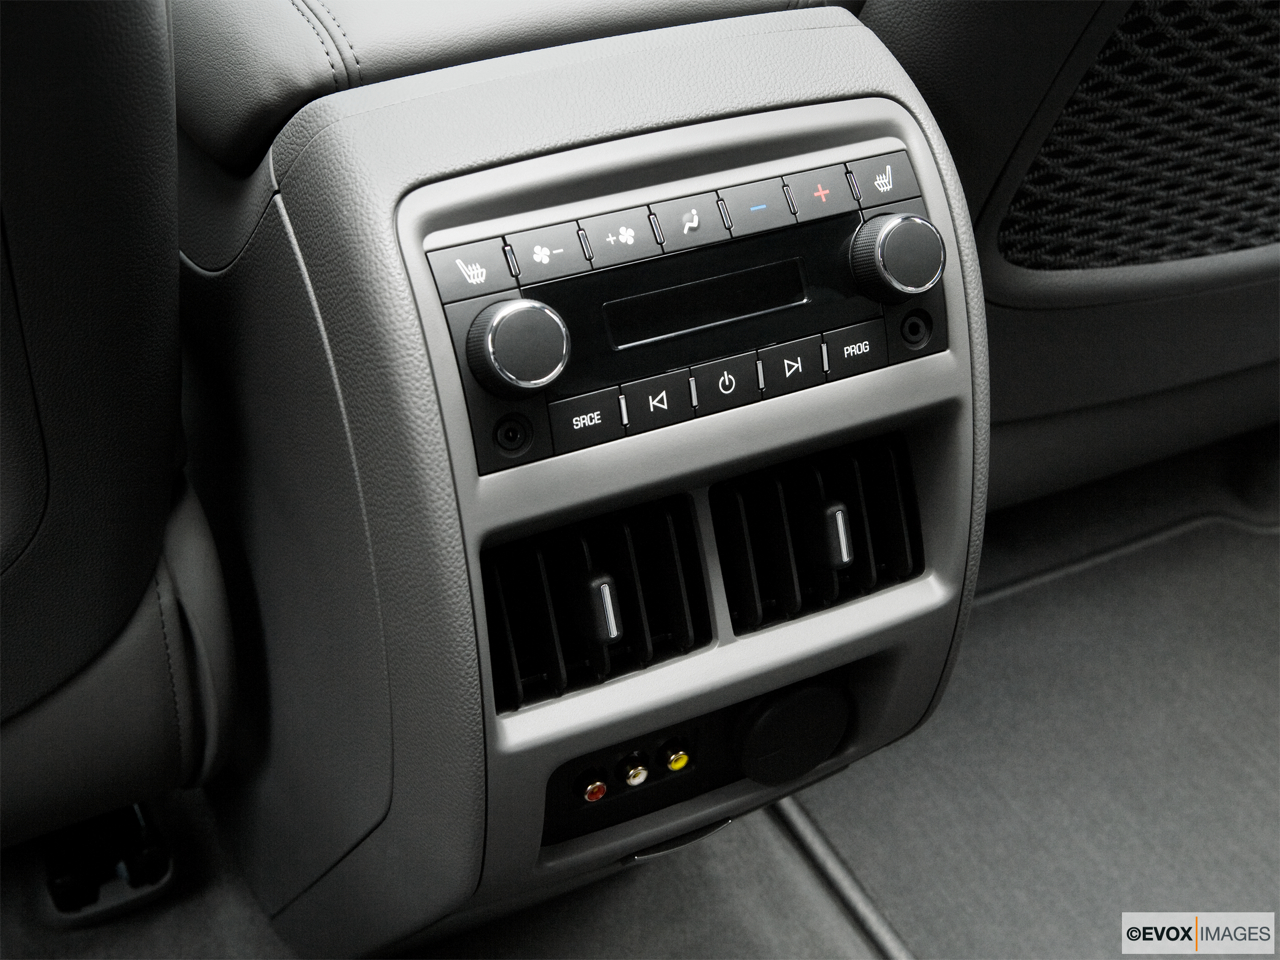 2010 Cadillac SRX Crossover Premium Collection Rear A/C controls. 